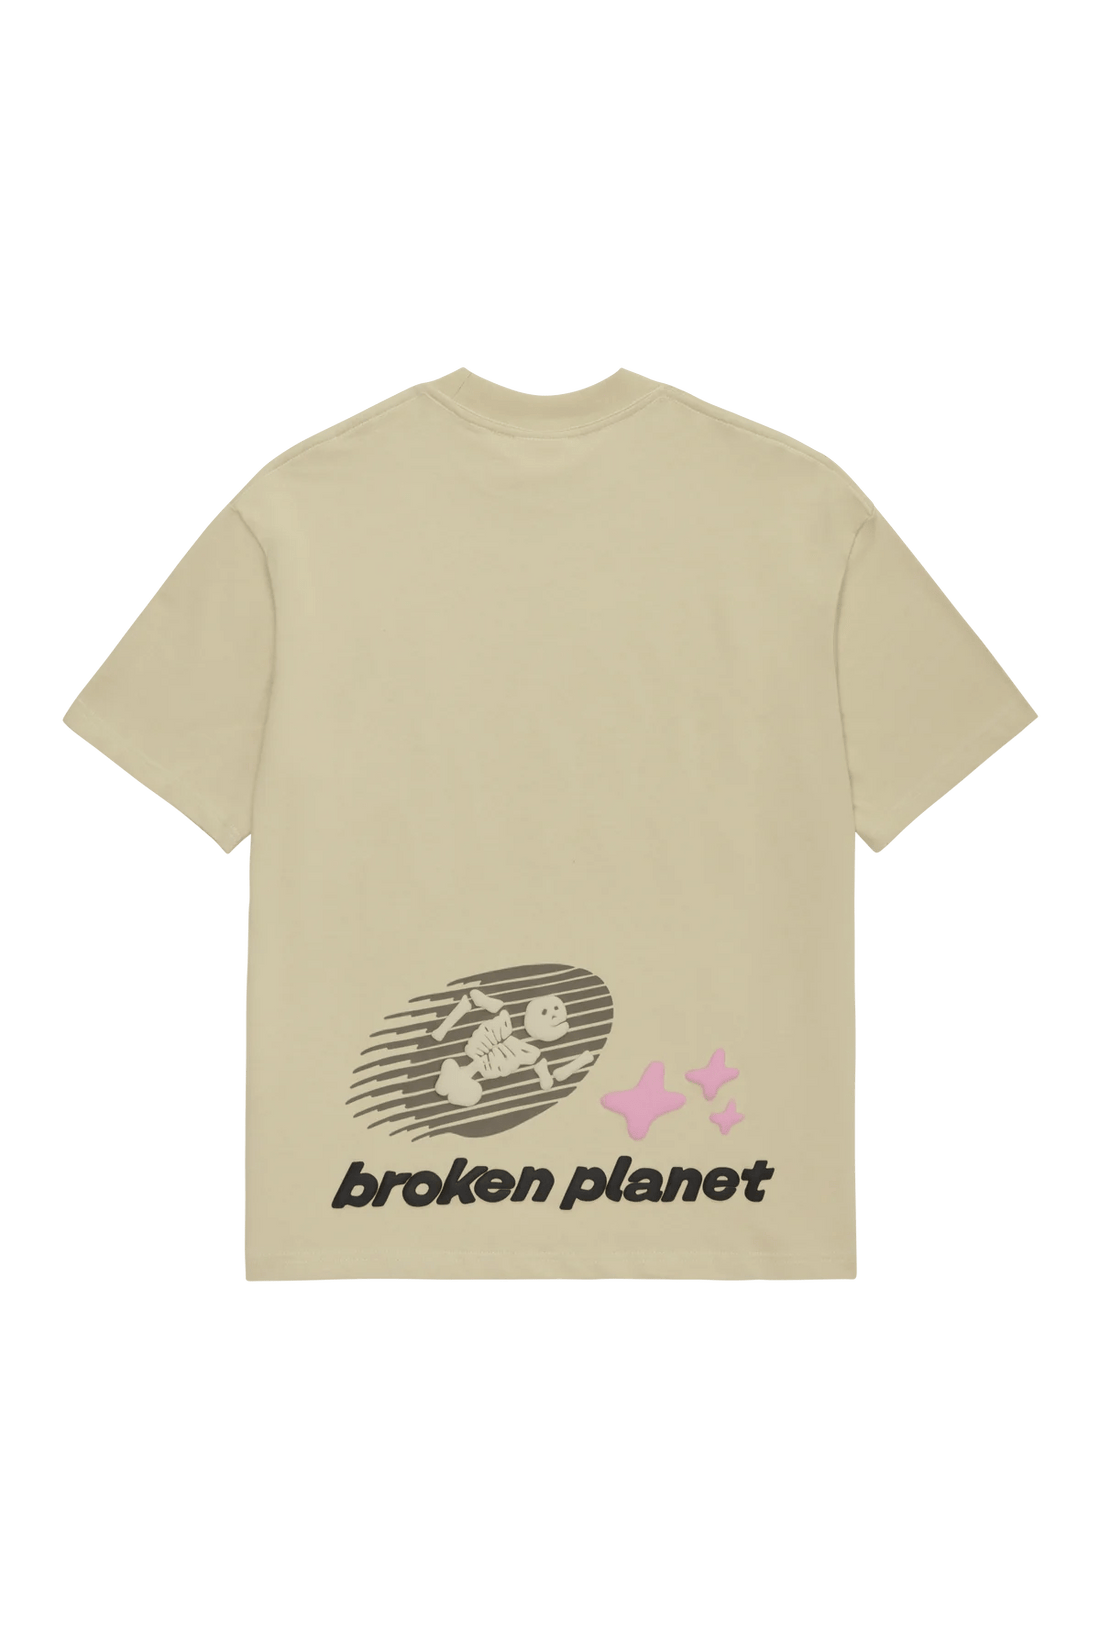 Broken Planet Cosmic Speed T-Shirt - INSTAKICKSZ LTD